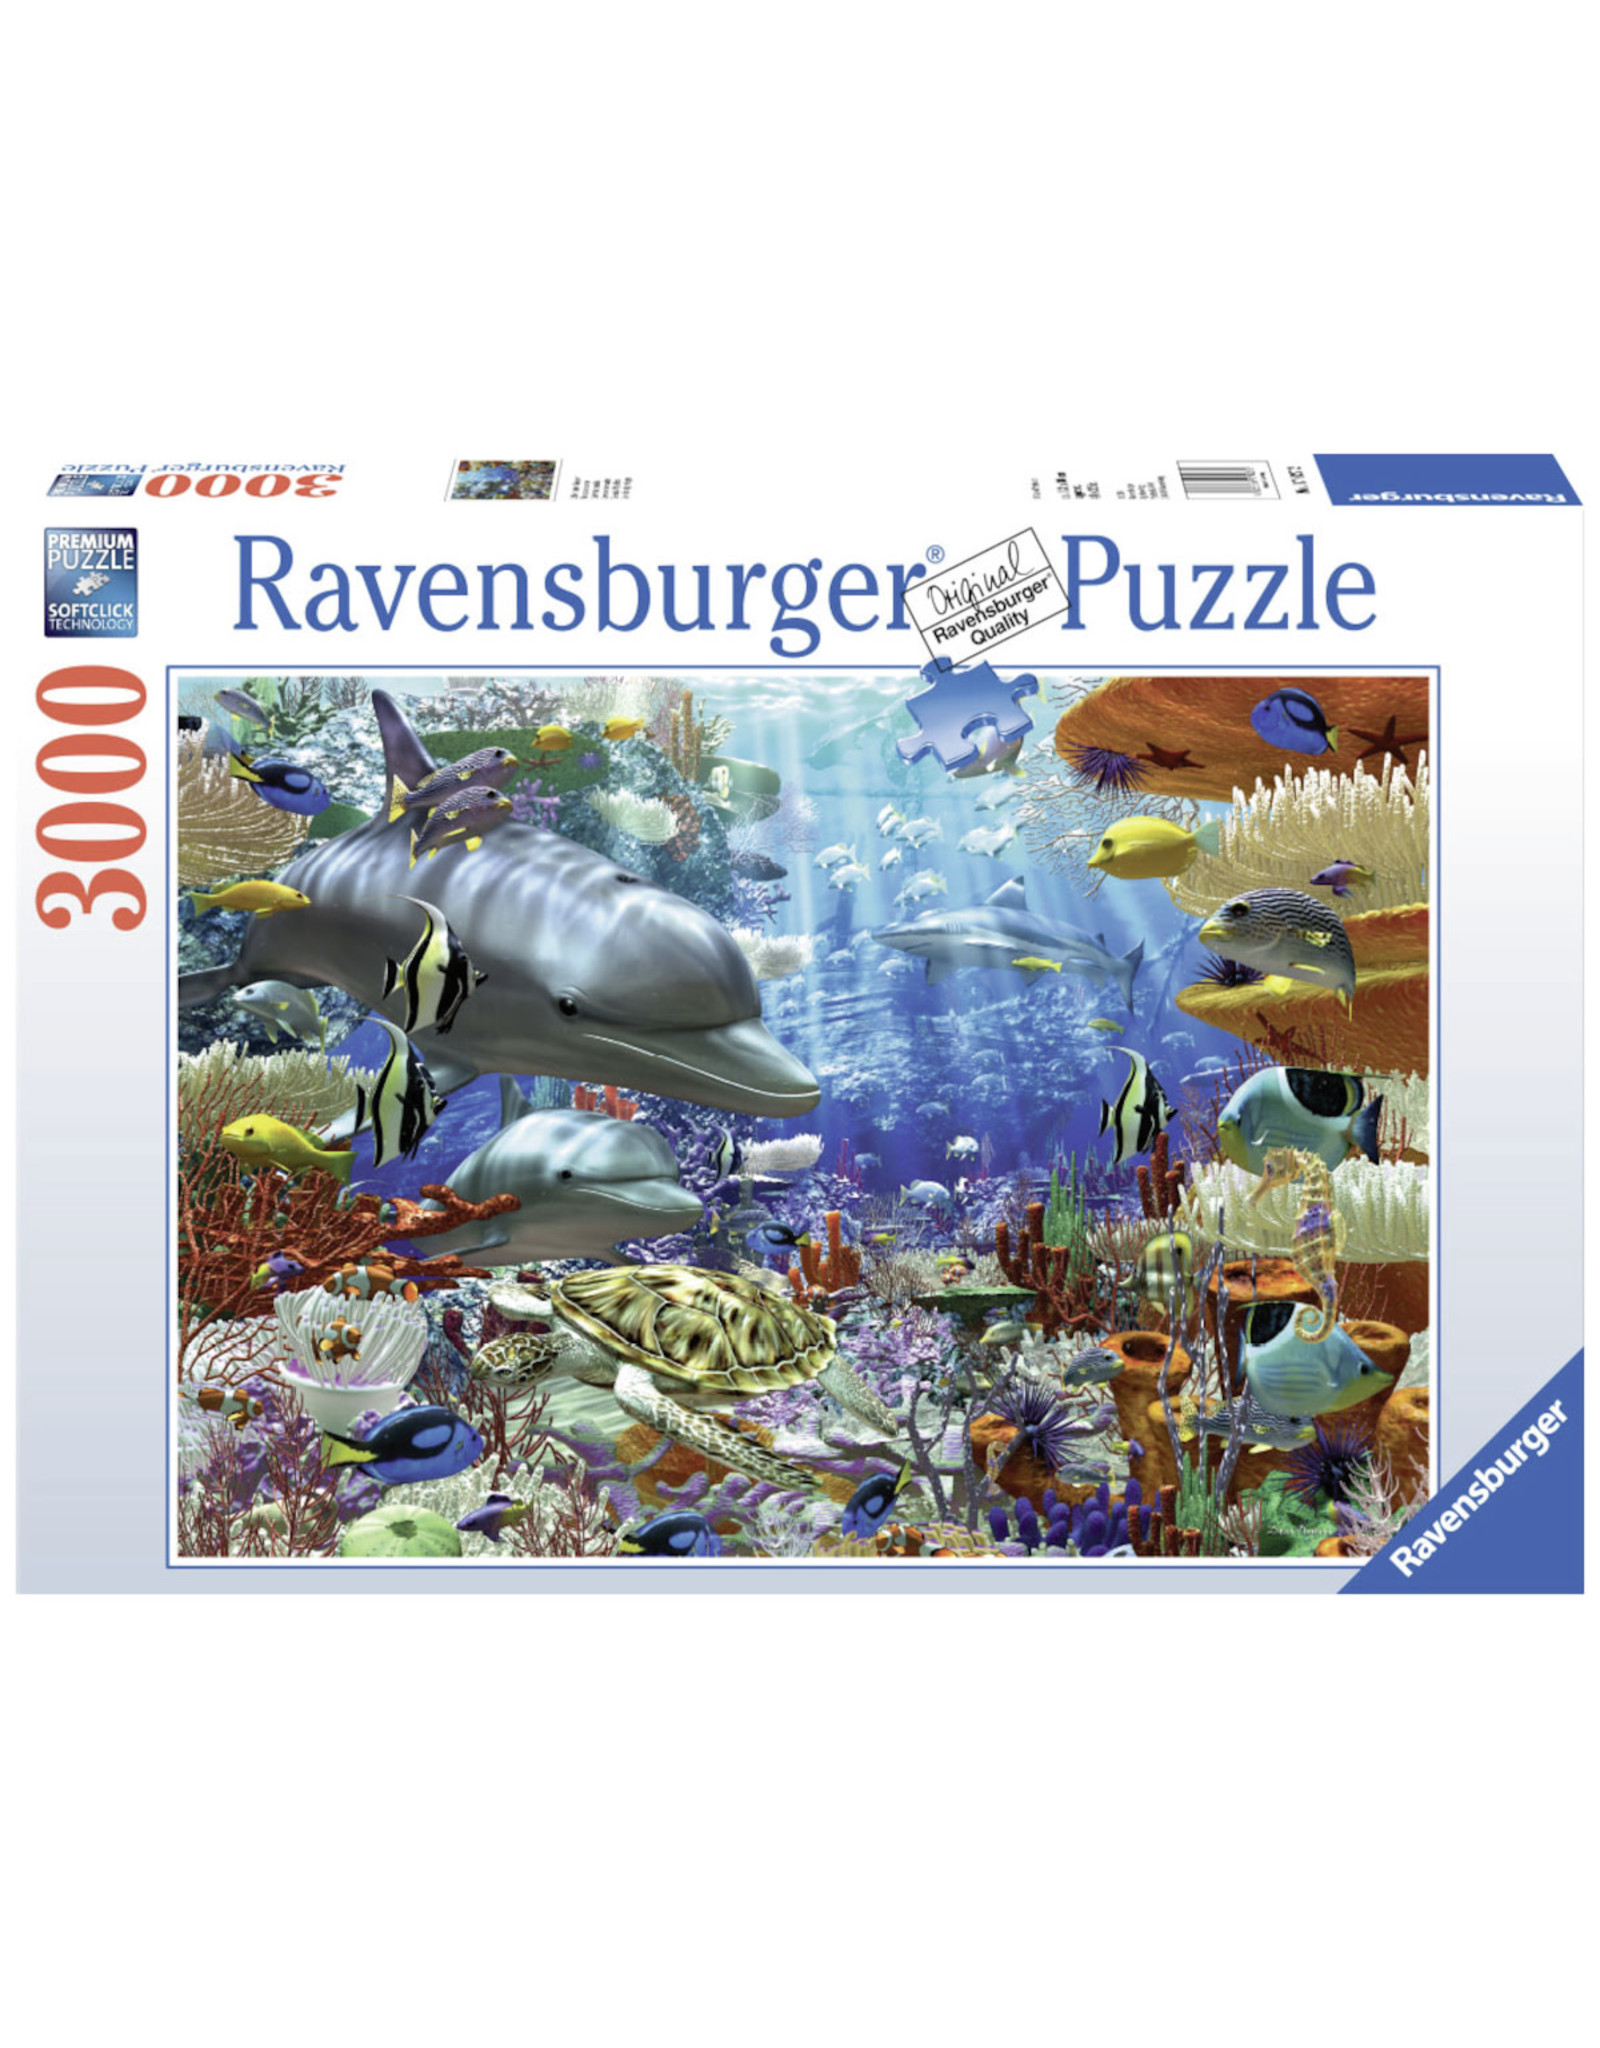 Ravensburger Ravensburger puzzel 170272 Leven onder Water 3000 stukjes